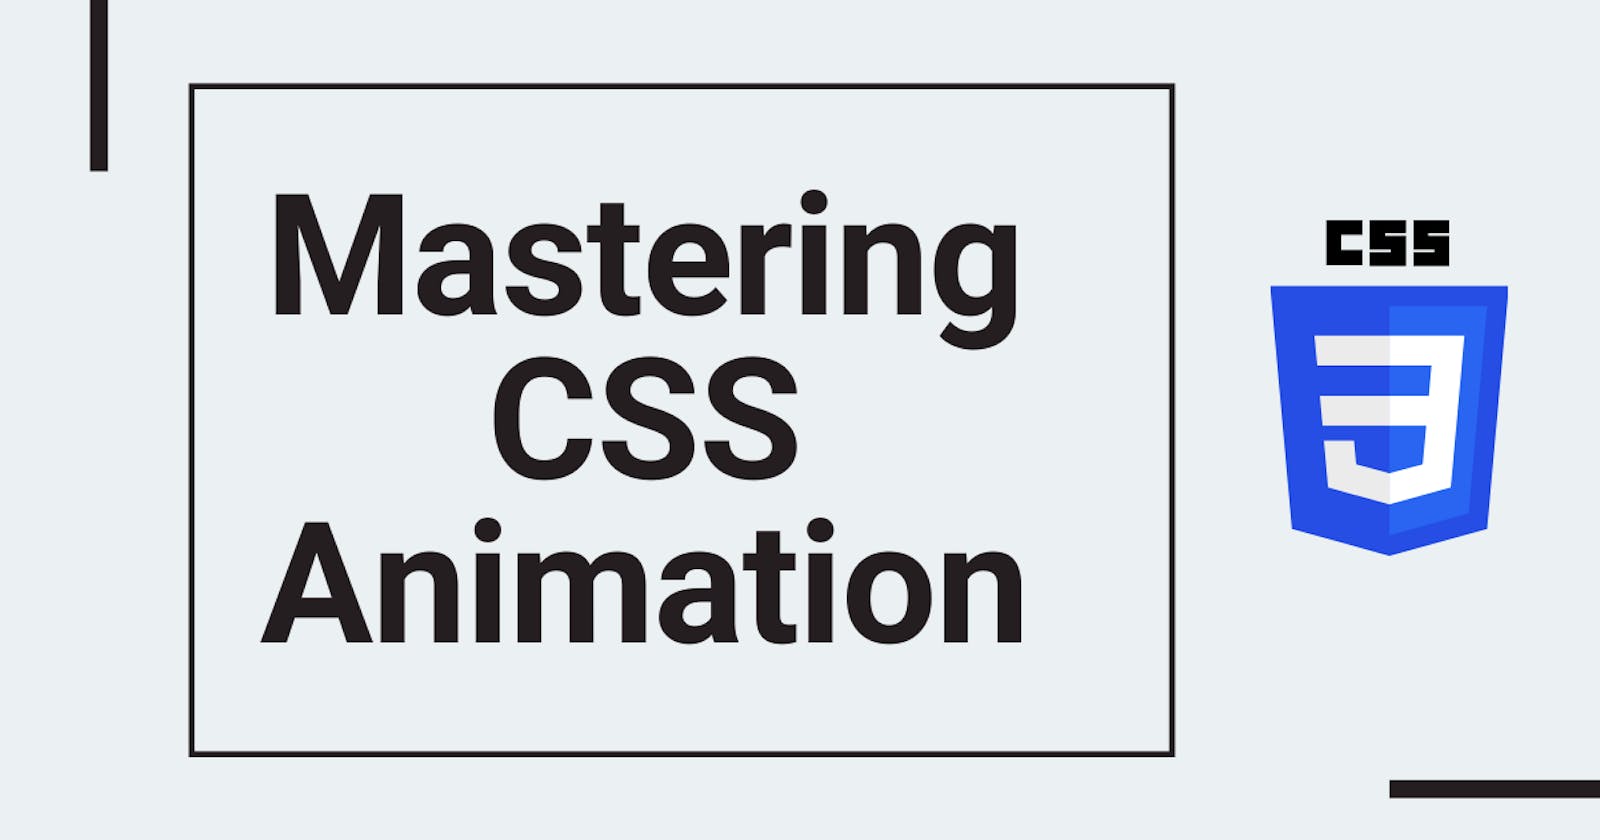 Mastering CSS Animation